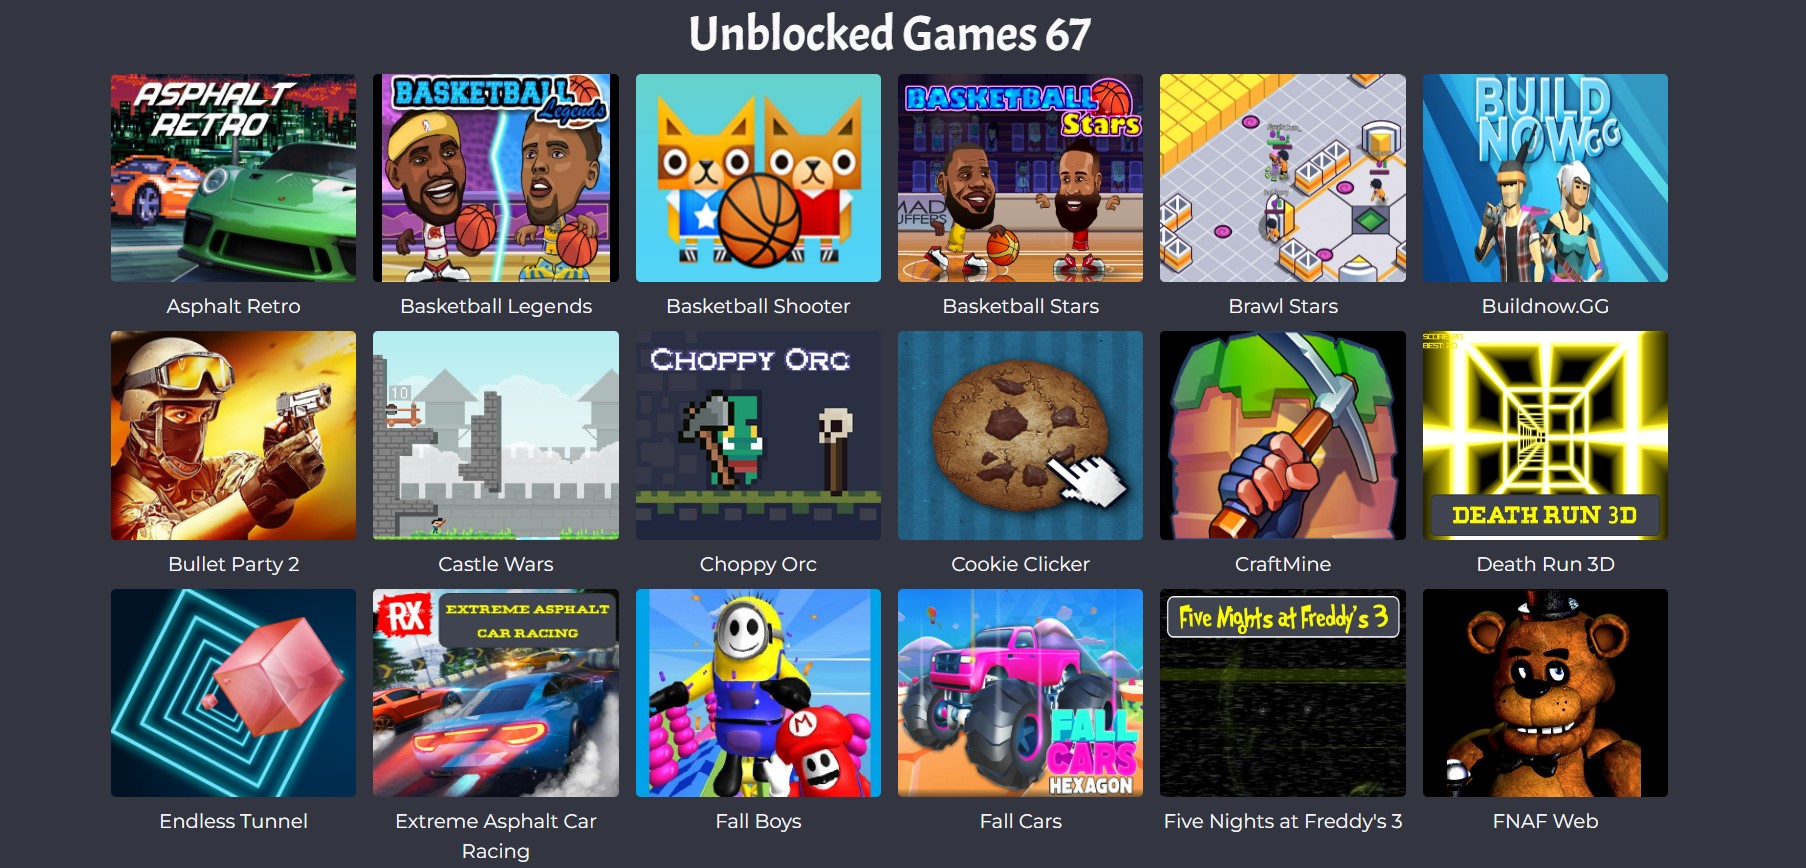 Unblocked Games 67 website